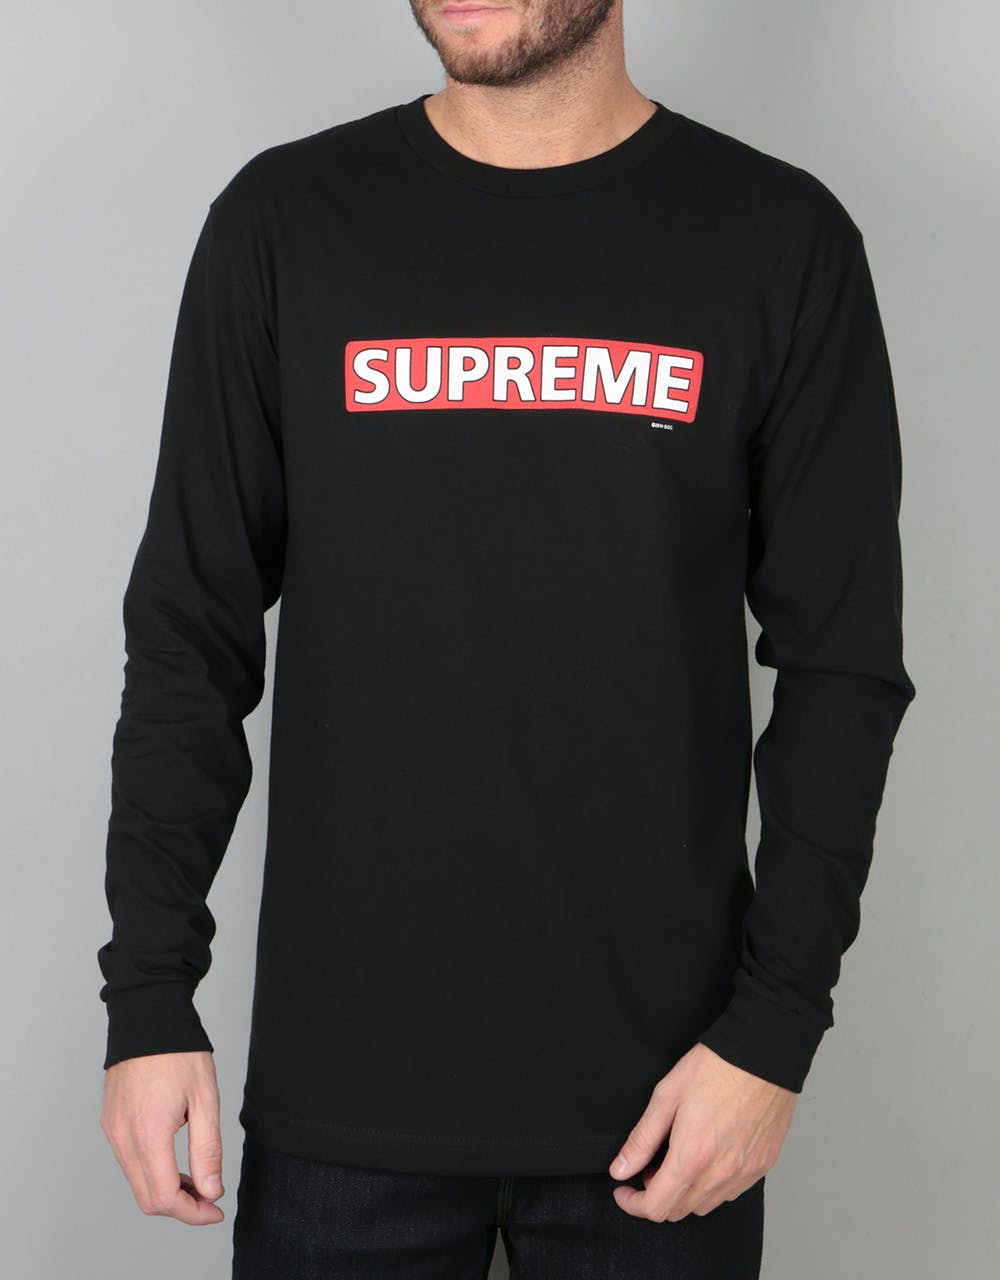 Powell Peralta Supreme L/S T-Shirt - Black